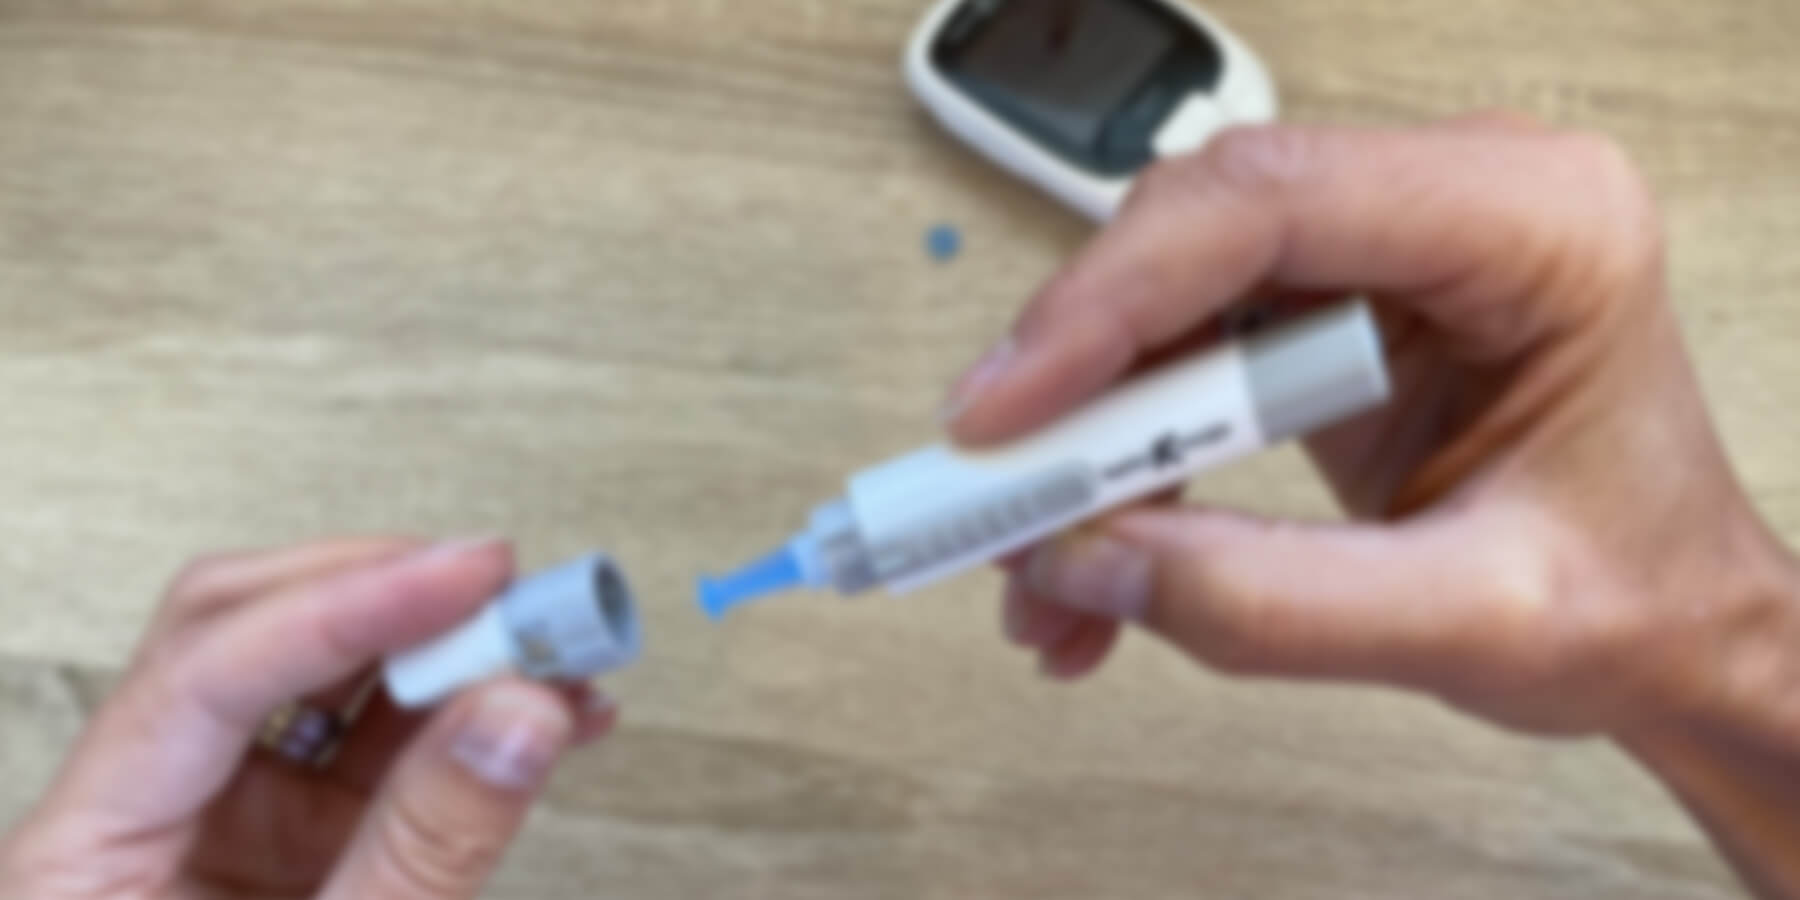 Ketone/Glucose Testing